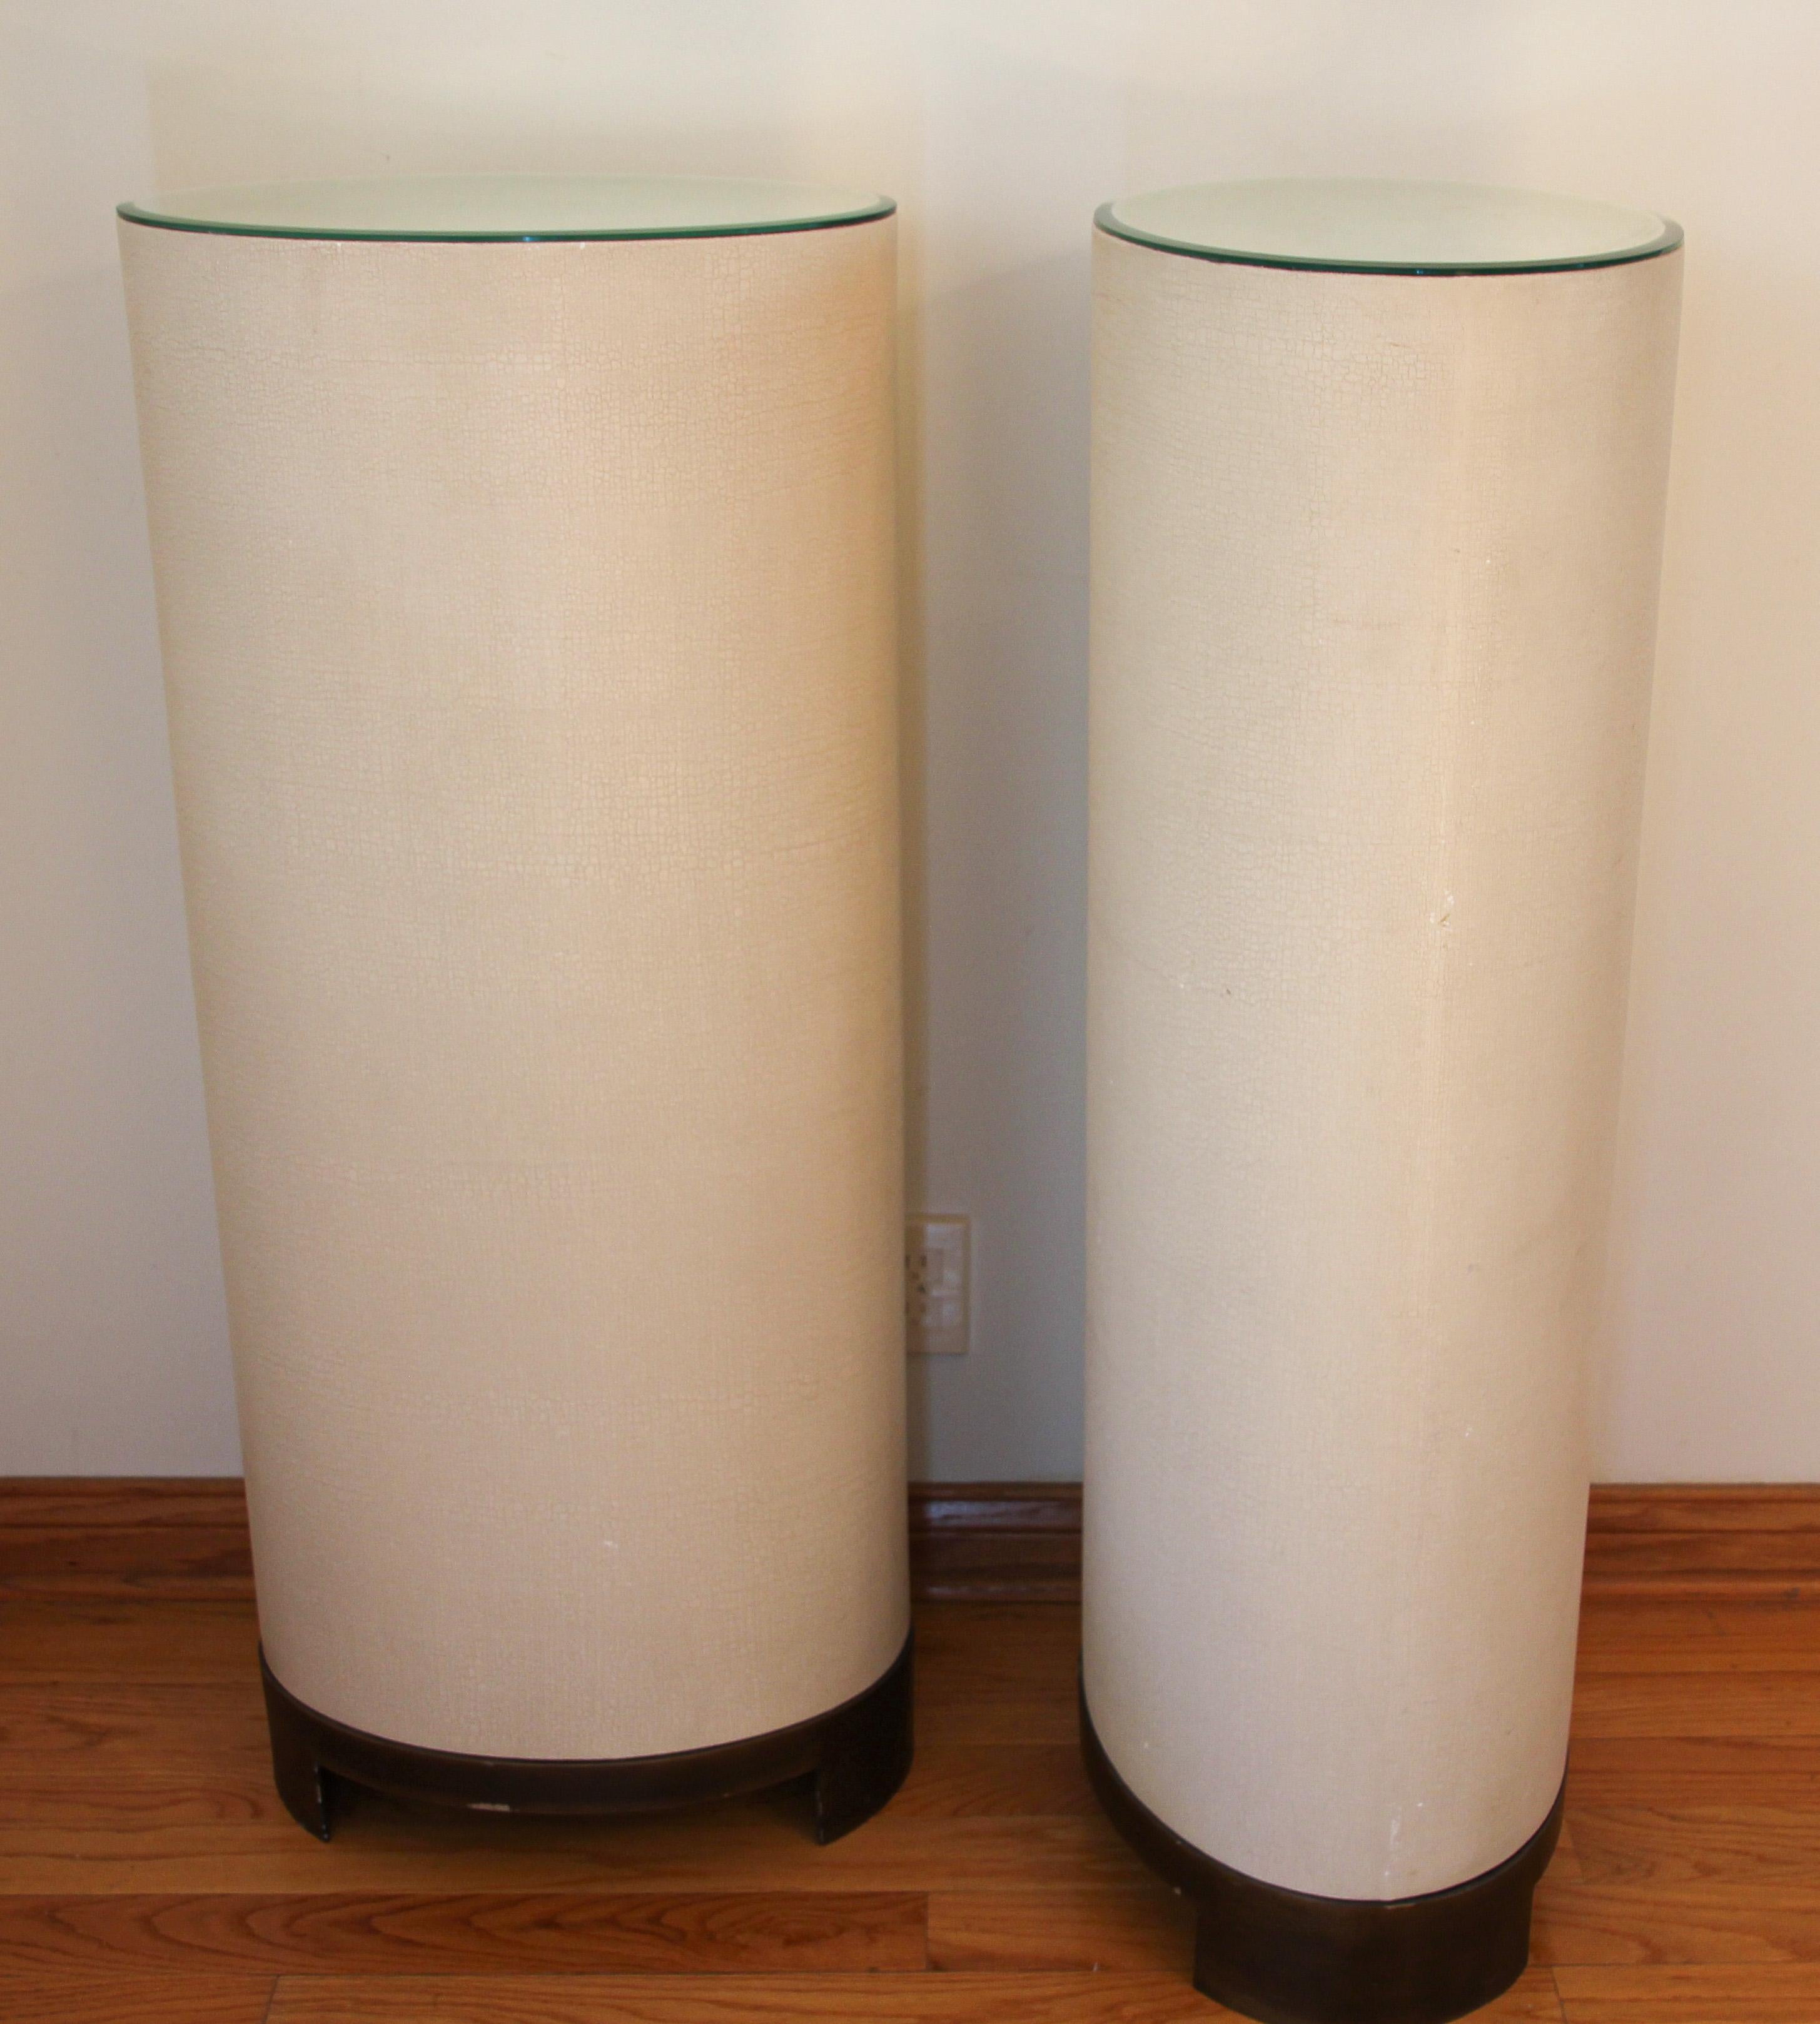 Vintage Pair of Ellipse Pedestals by Global Views For Sale 3